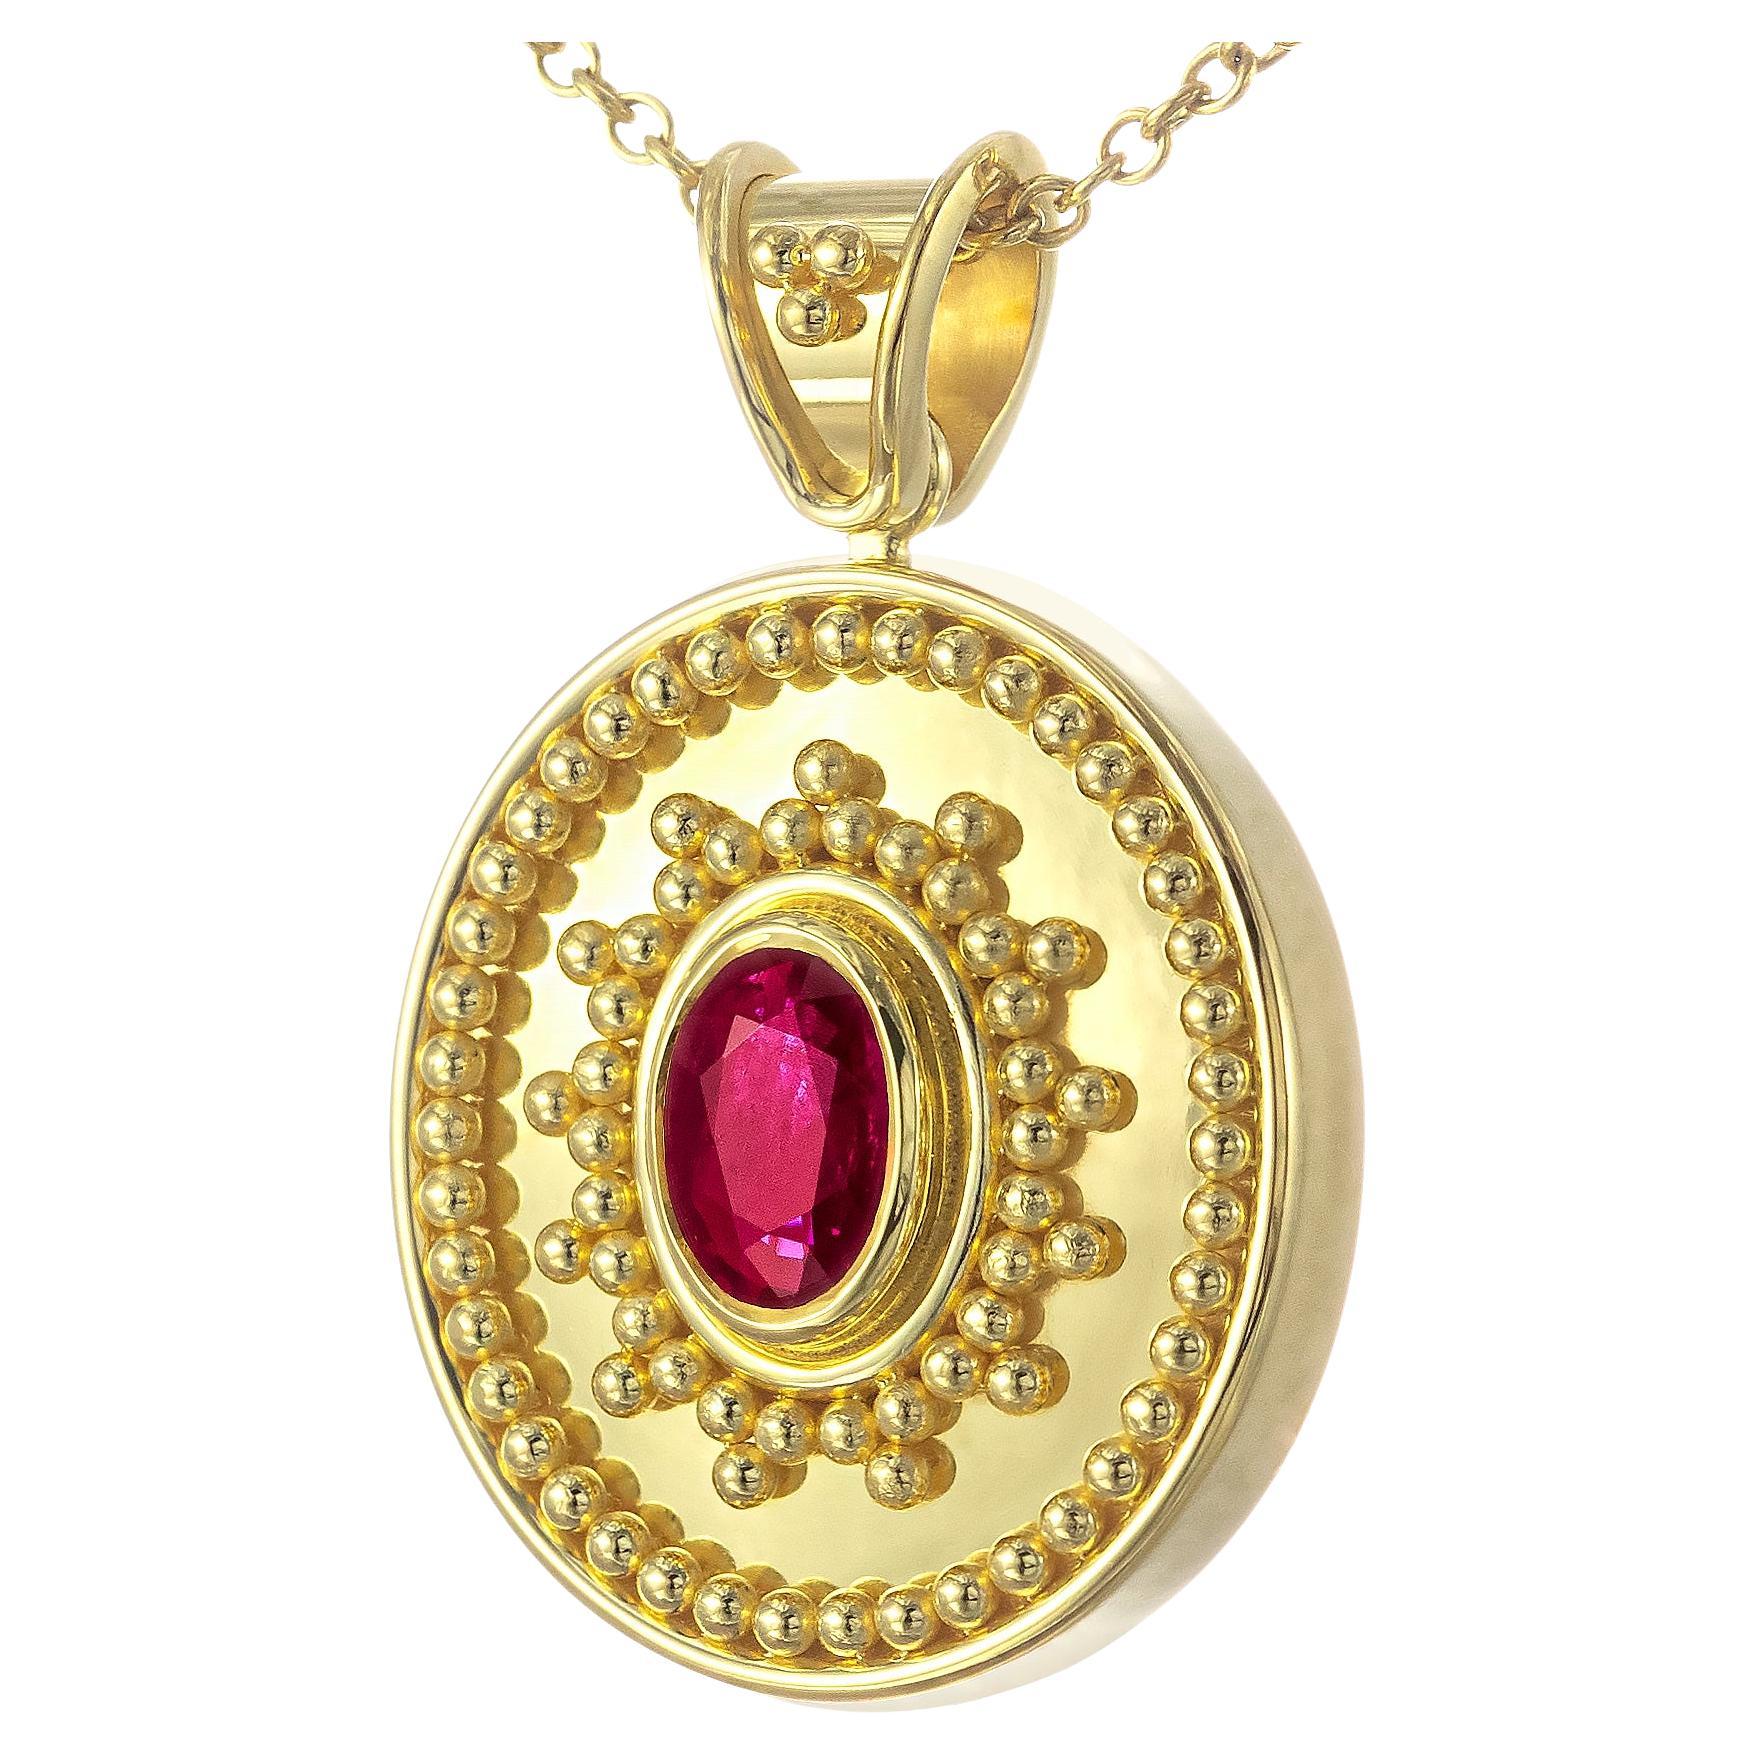 Pendentif ovale en or byzantin avec finition brillante et rubis